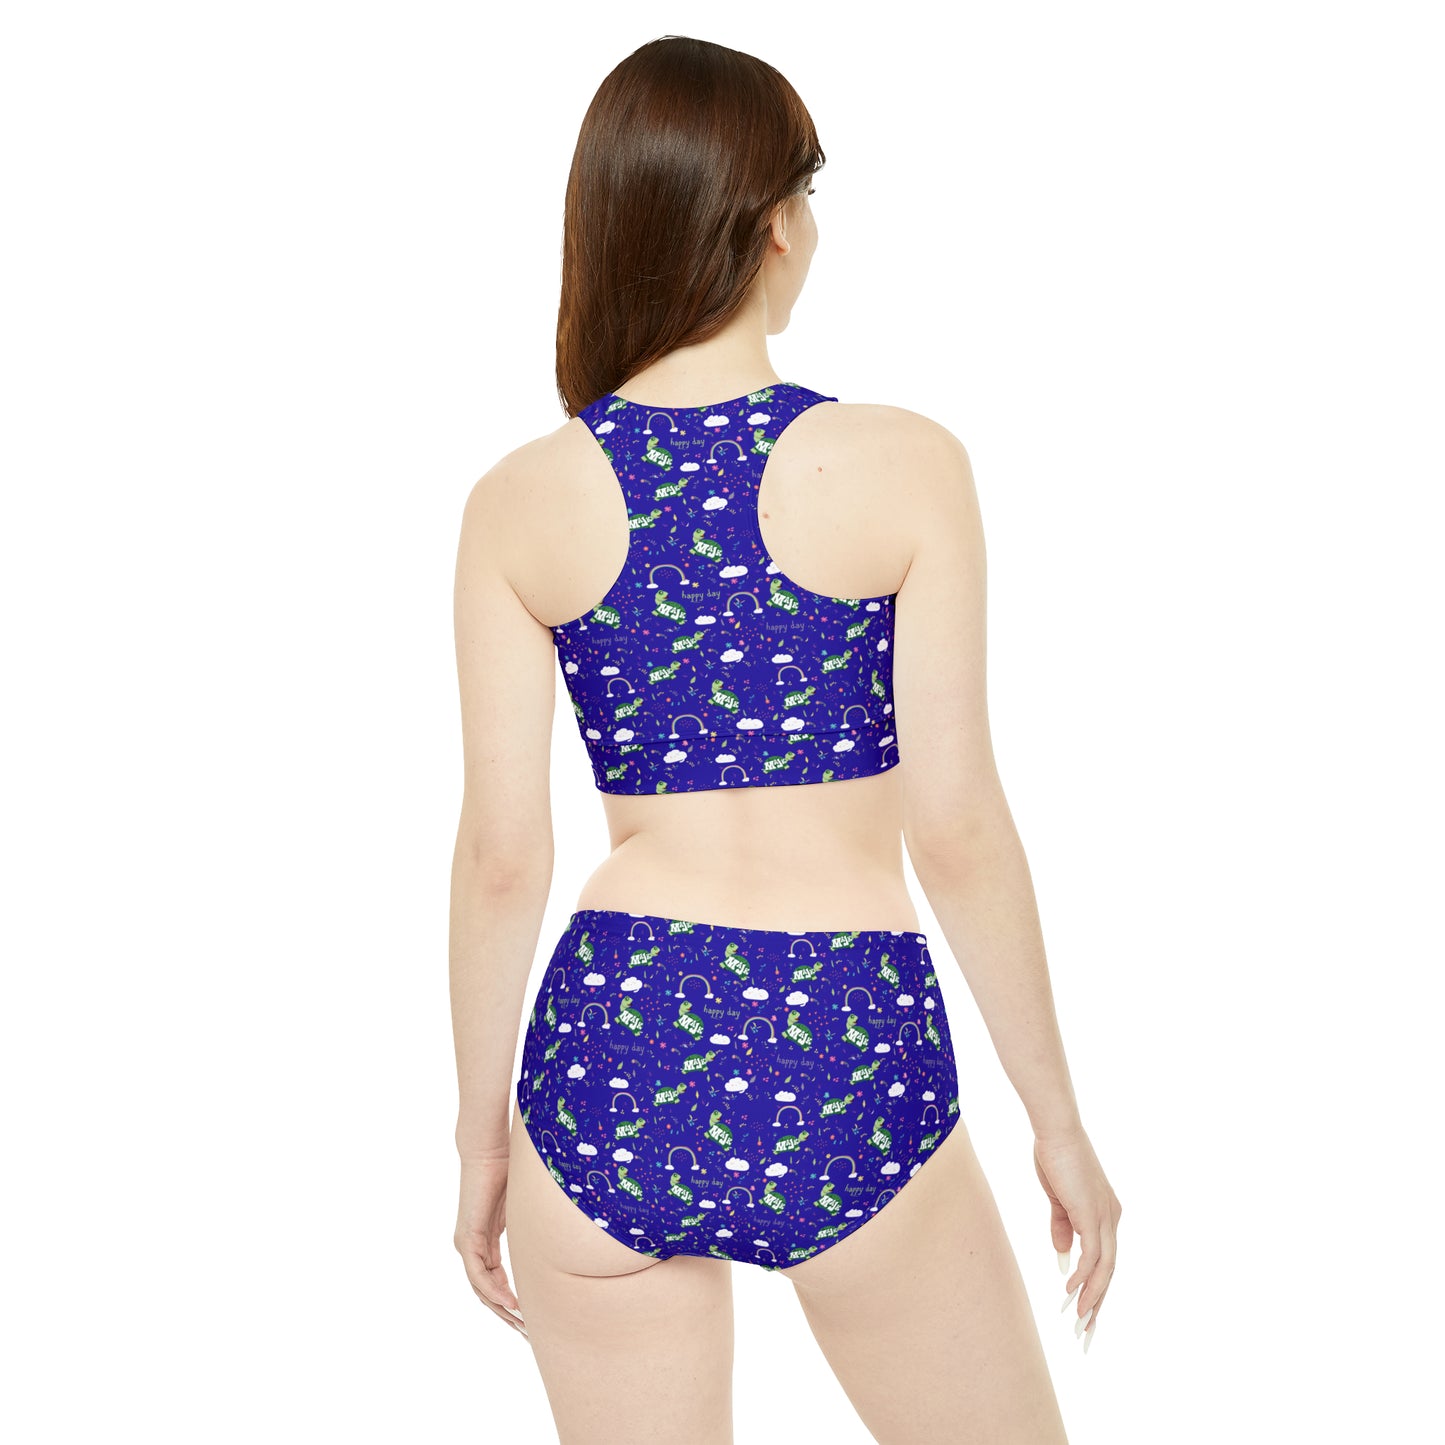 Youth/ Women's Sporty 2 piece Bikini Swimsuit set "Happy Days Collection"